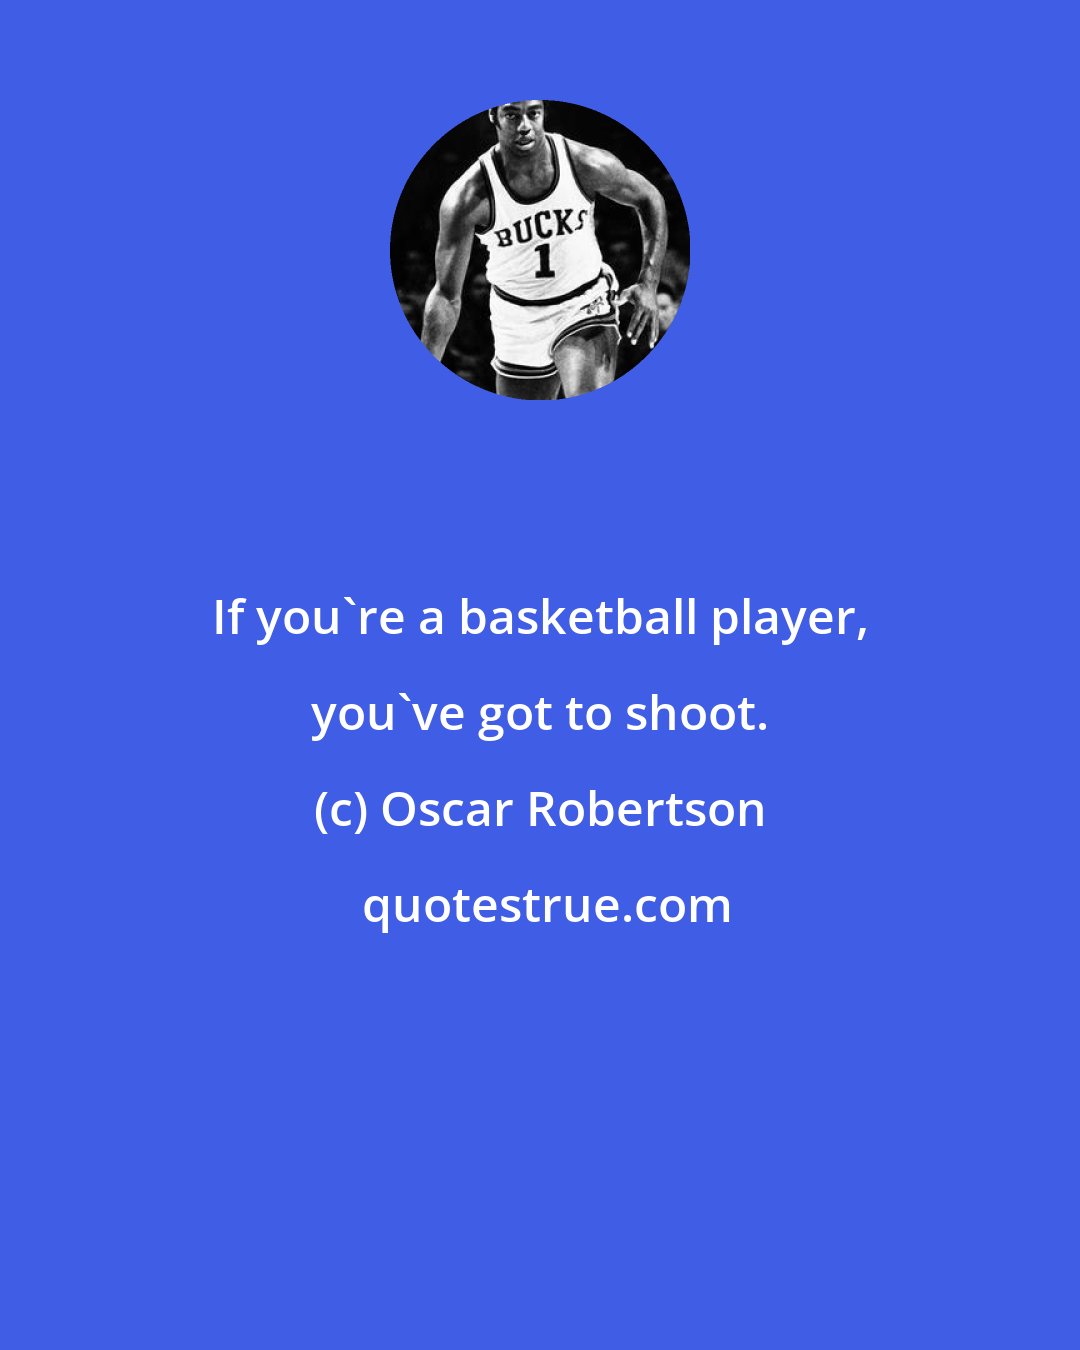 Oscar Robertson: If you're a basketball player, you've got to shoot.